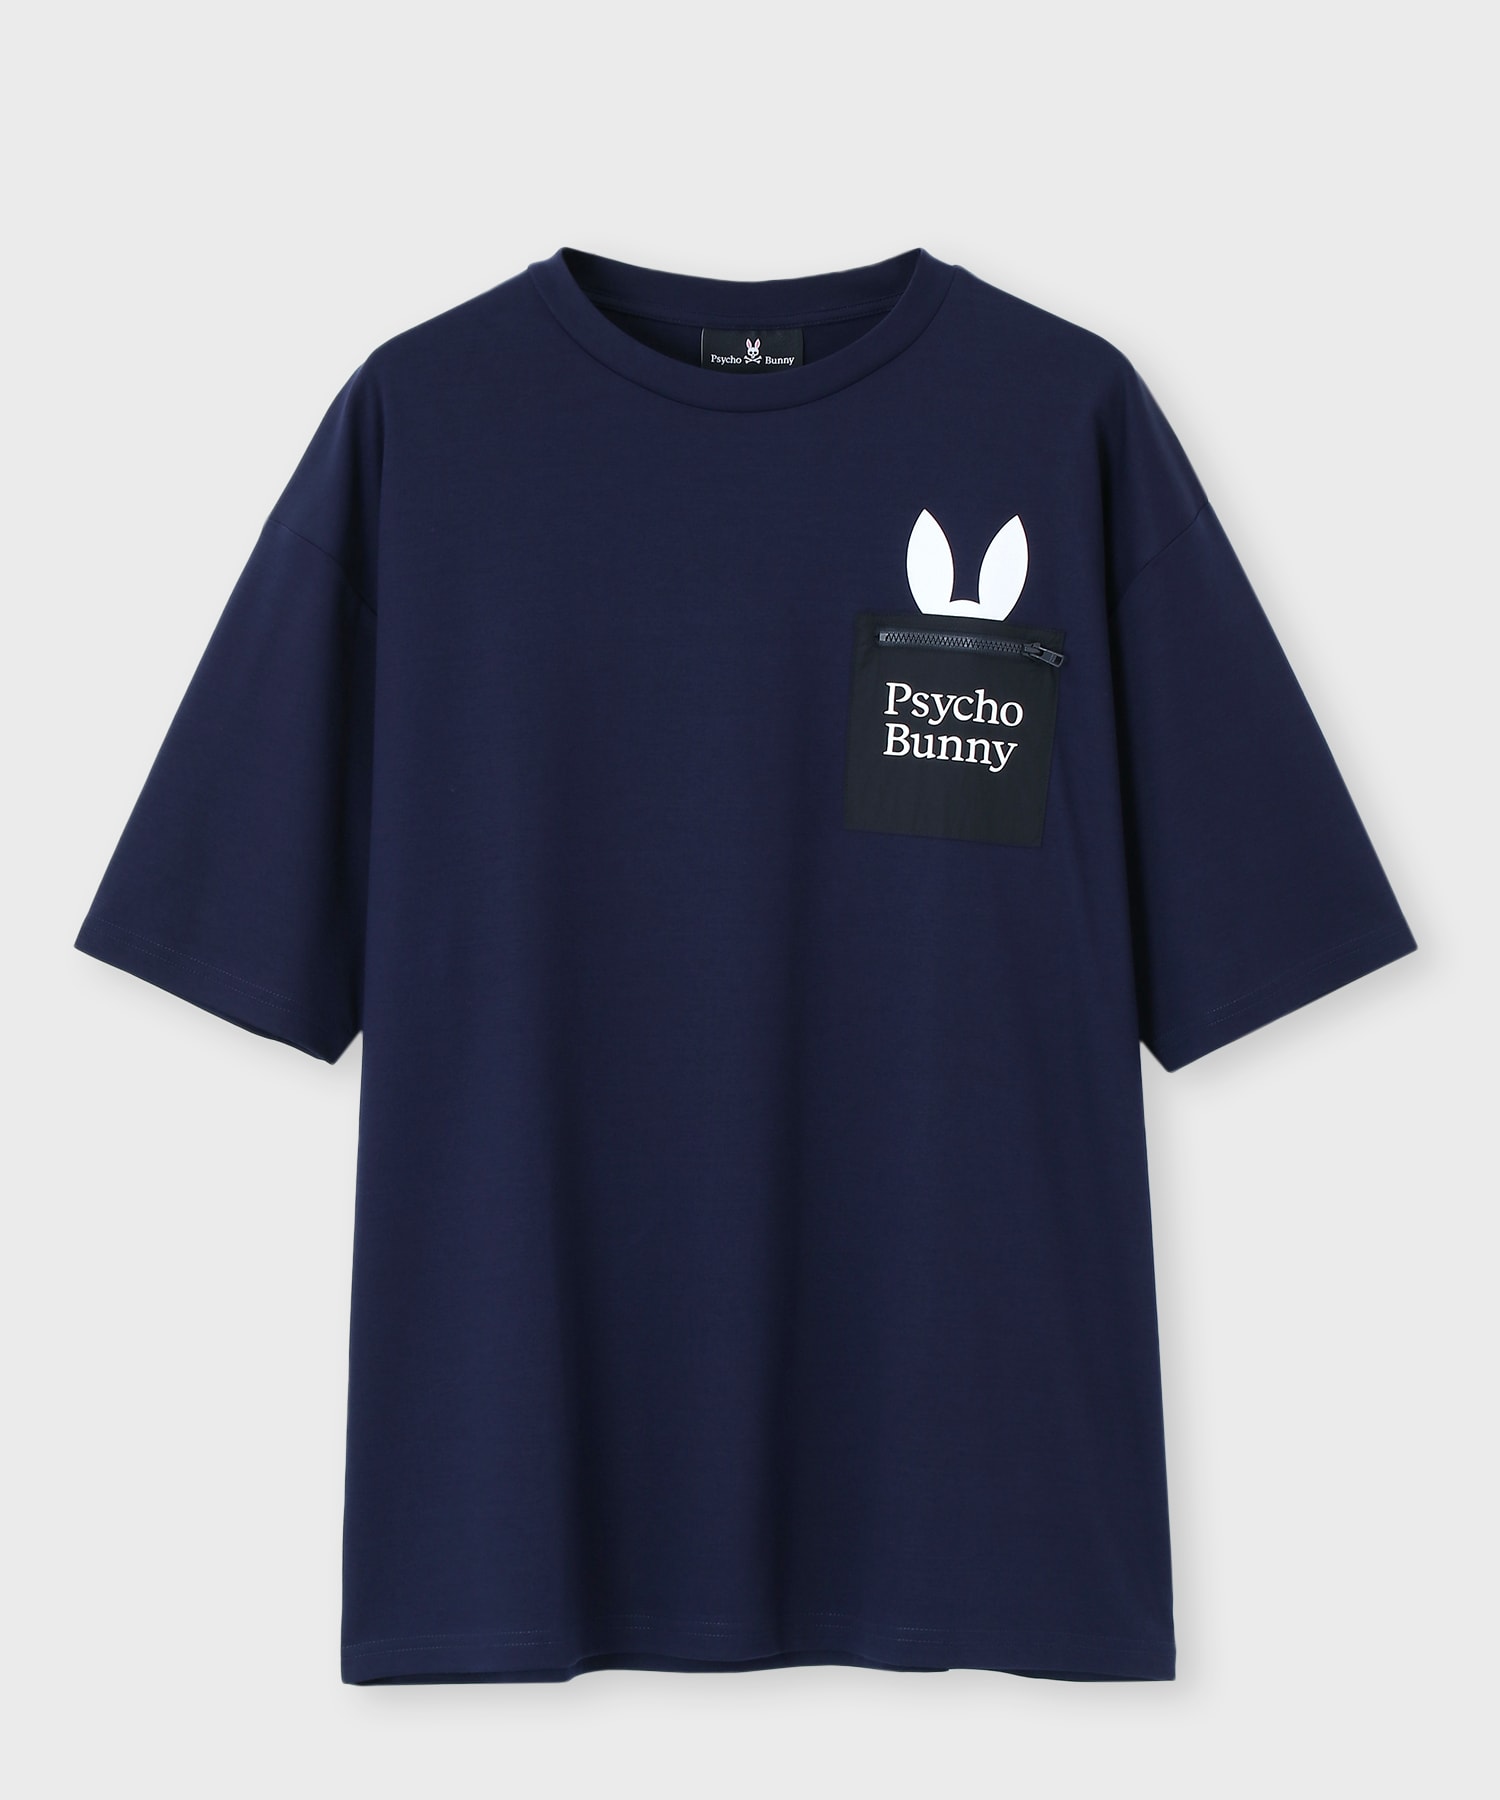 NEWポケットバニー Tシャツ｜Psycho Bunny｜サイコバニー 公式ブランド 